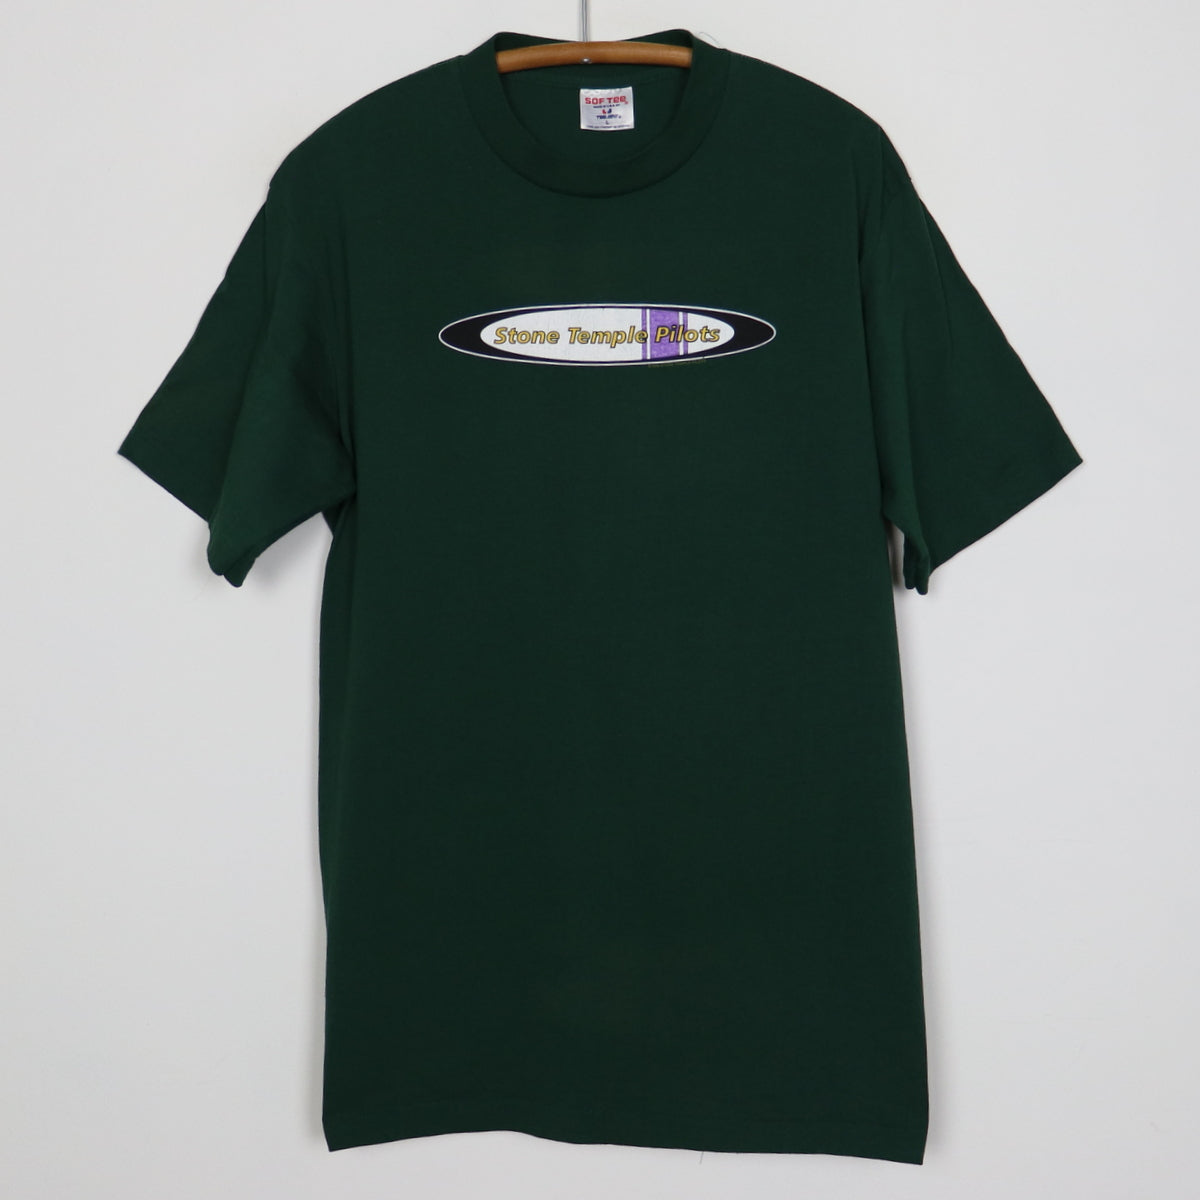 1996 Stone Temple Pilots North American Tour Shirt